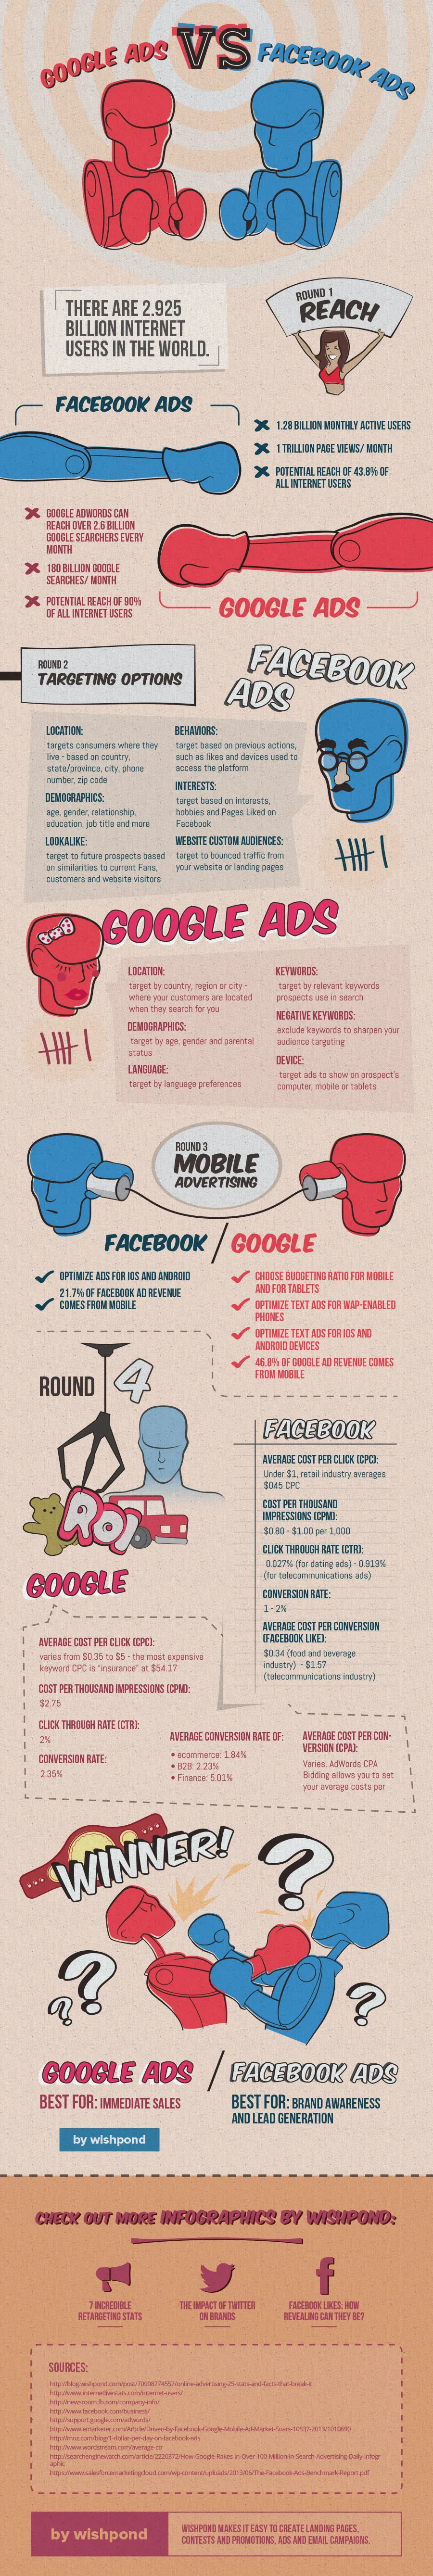 Google Adwords VS. Facebook Ads